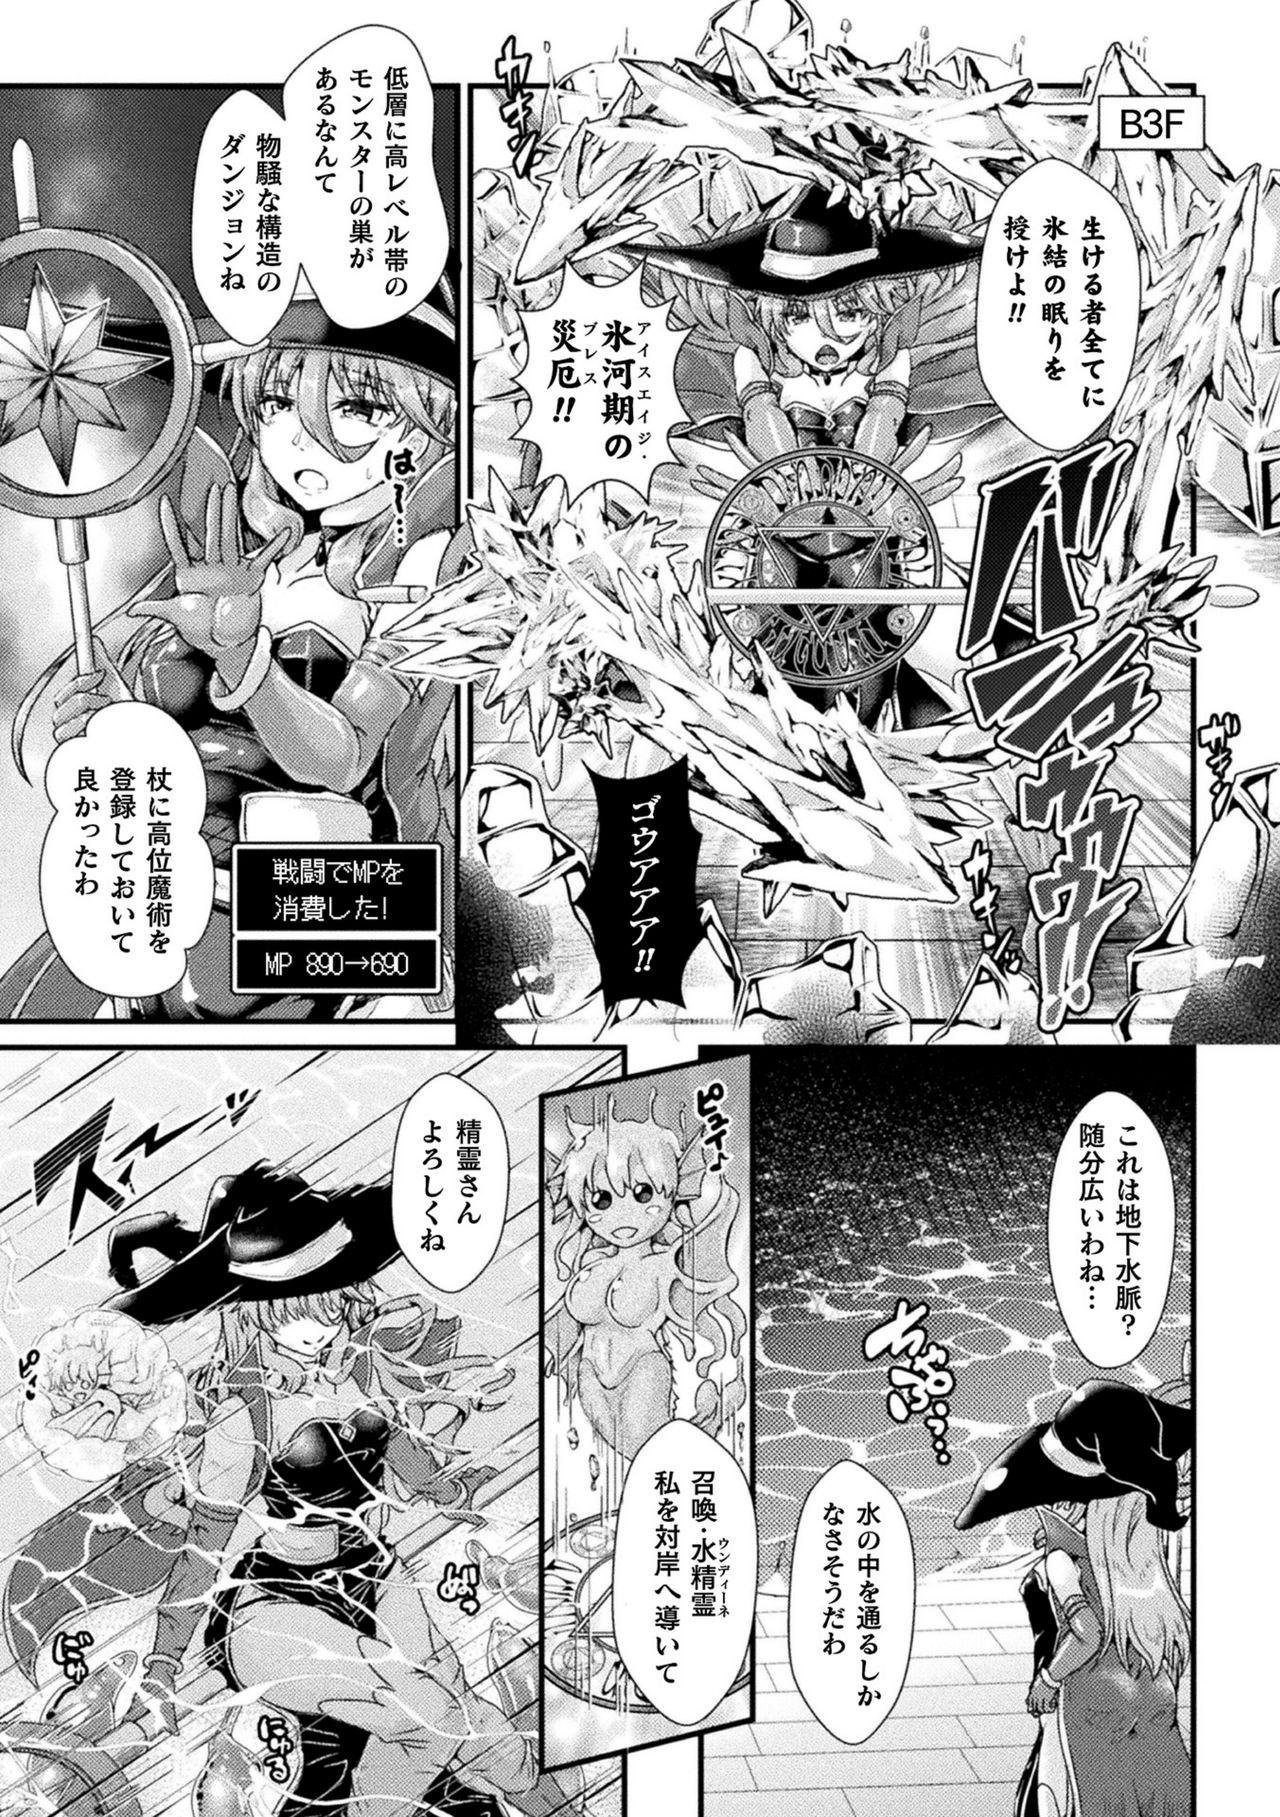 2D Comic Magazine Zecchou Kairaku ga Tomaranai Ero-Trap Dungeon Vol. 3 42